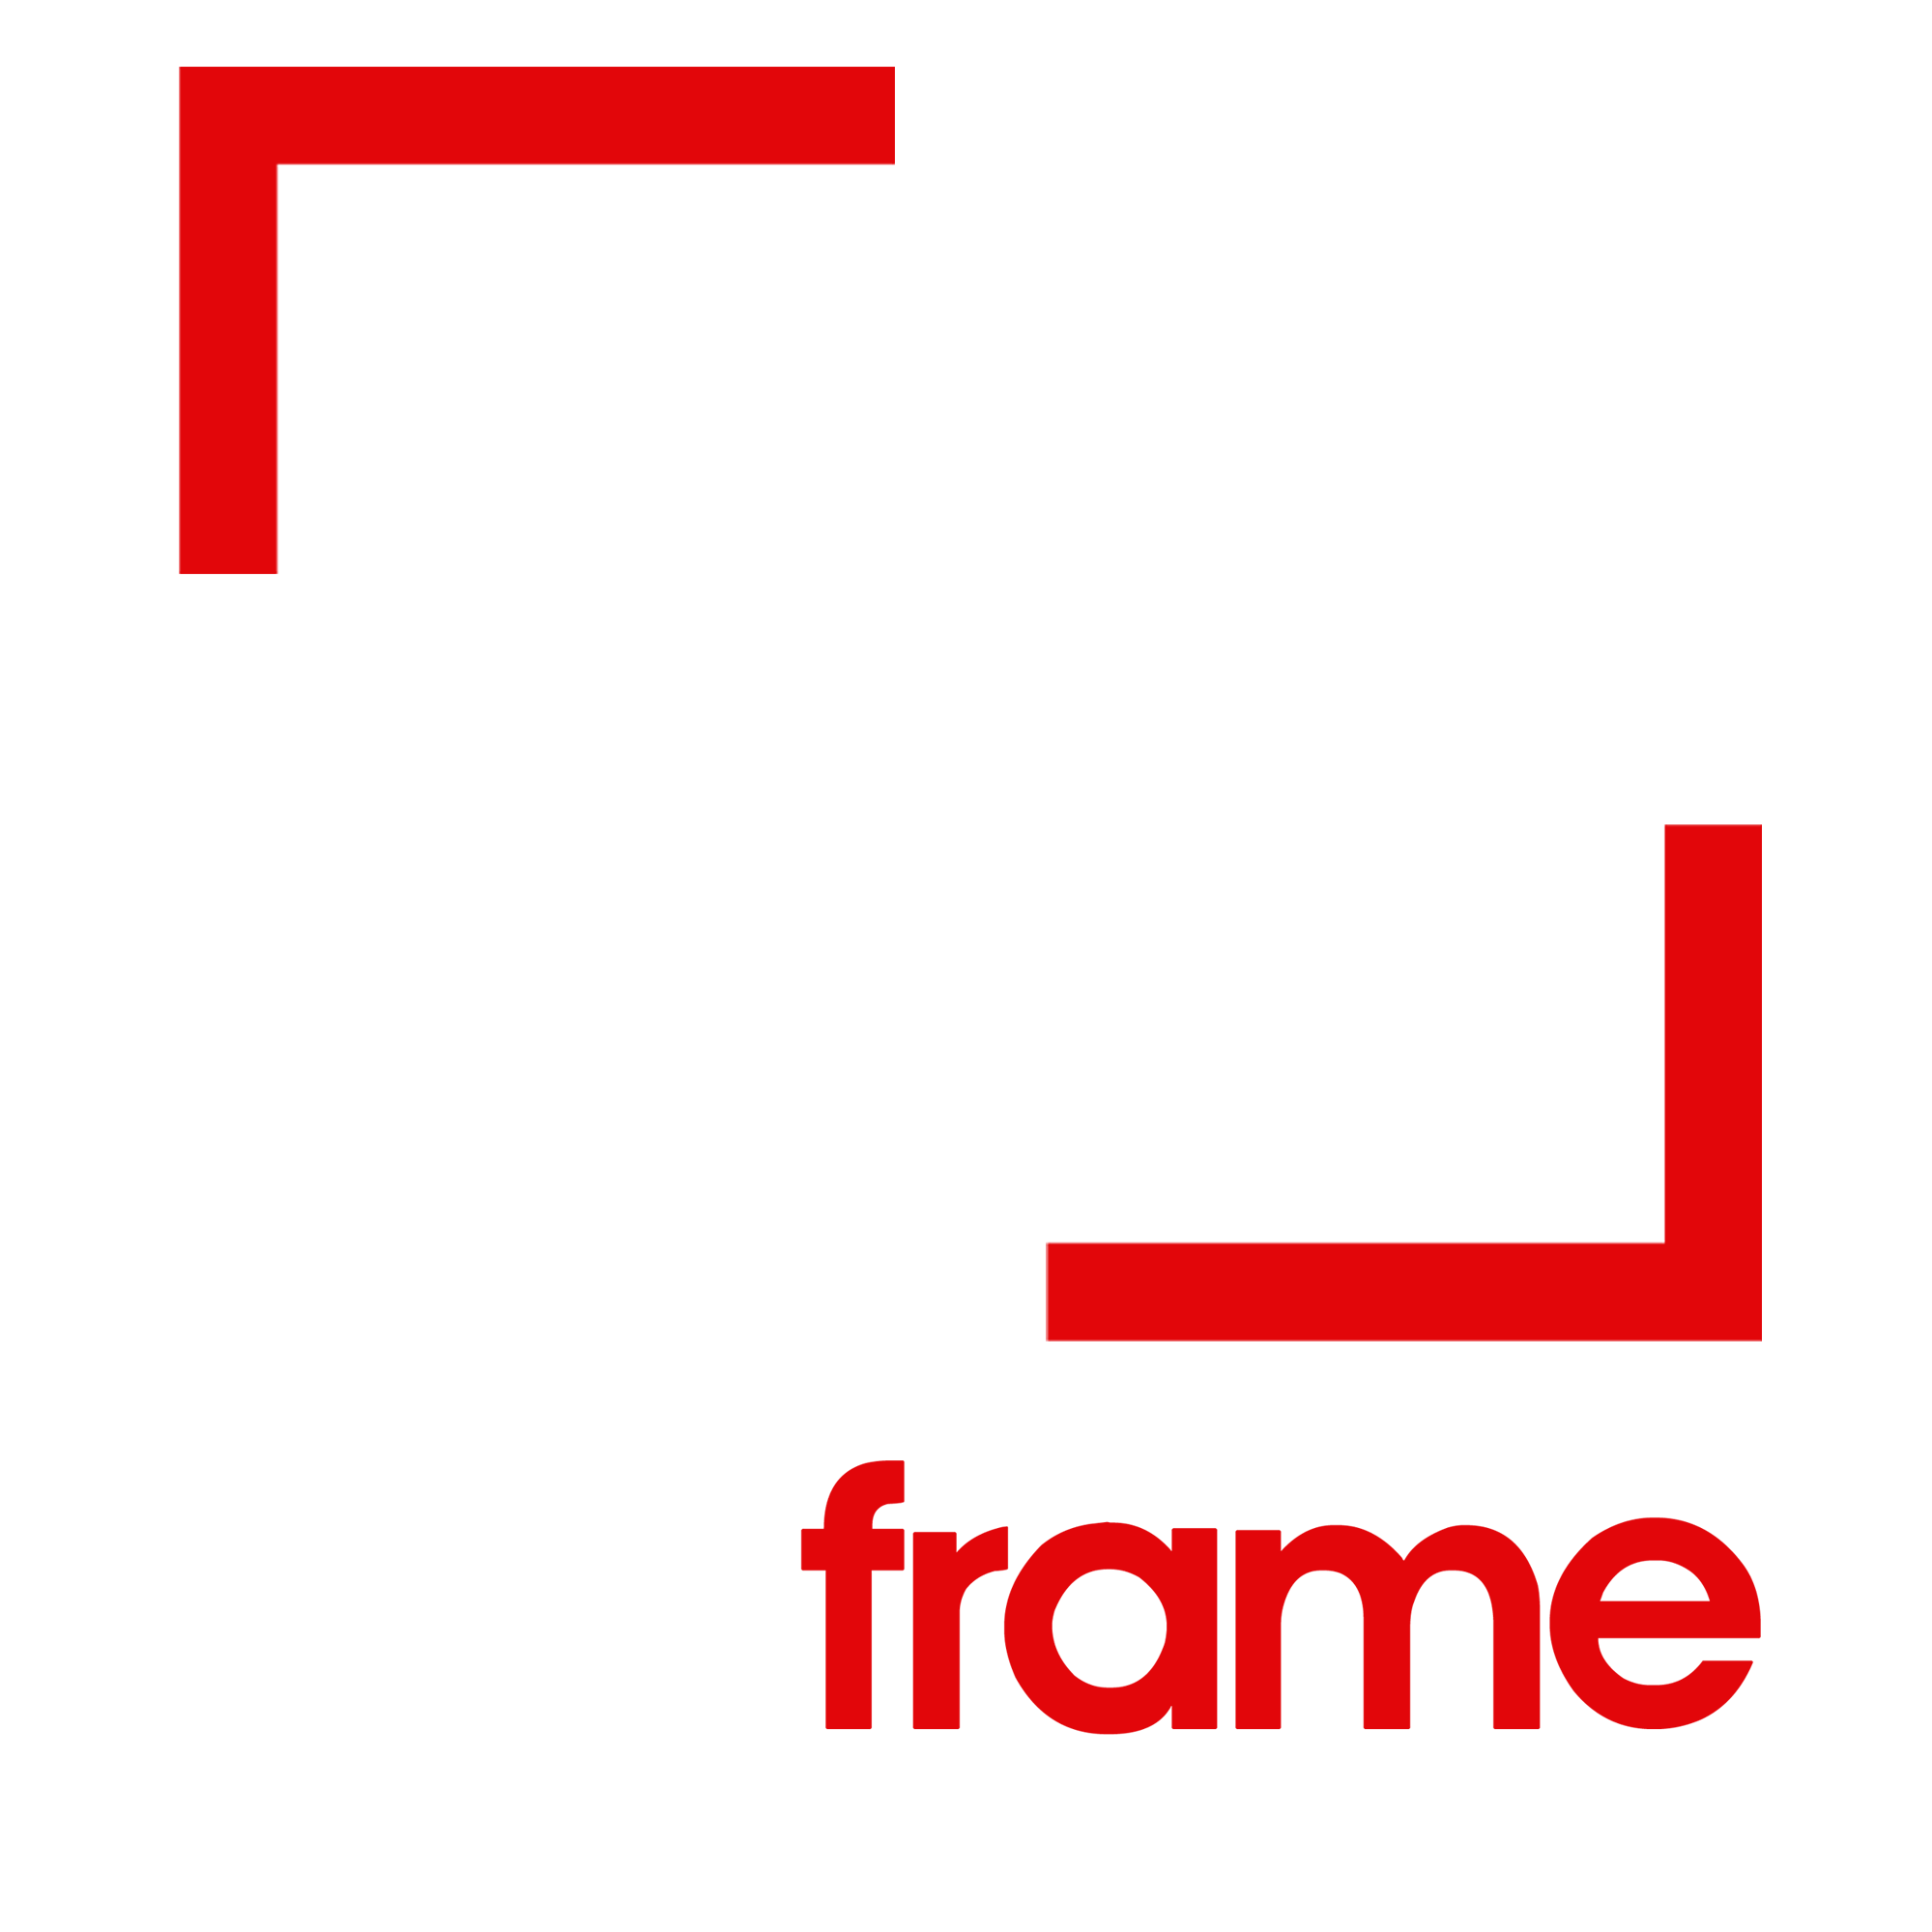 Using Red Square Logo - Photography Websites with Portfolio, Customization, Shopping Cart ...